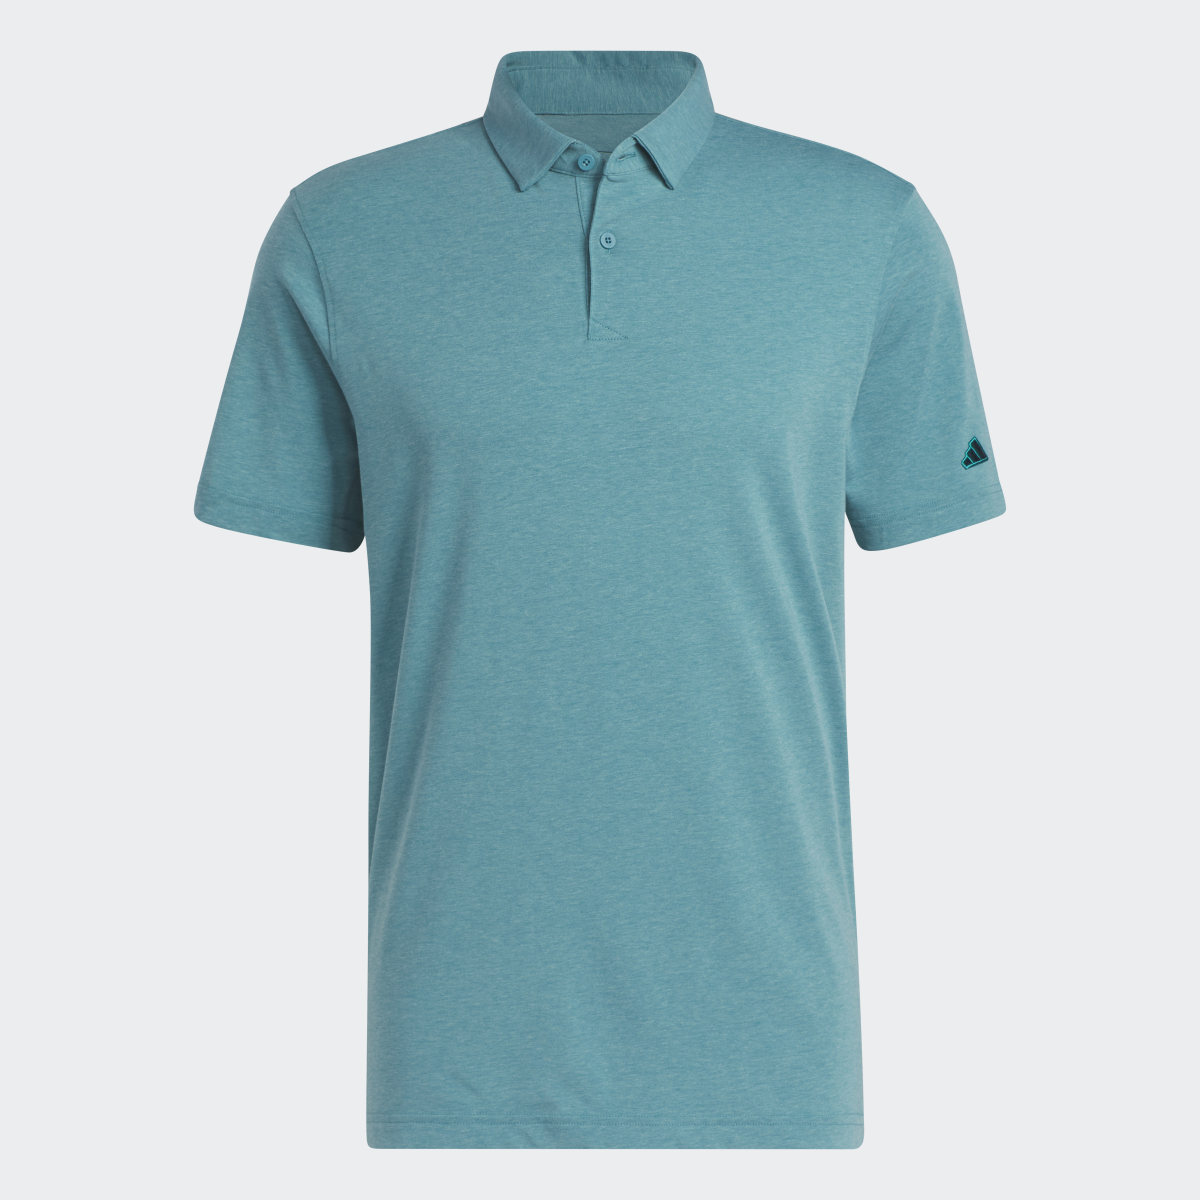 Adidas Go-To Golf Polo Shirt. 6